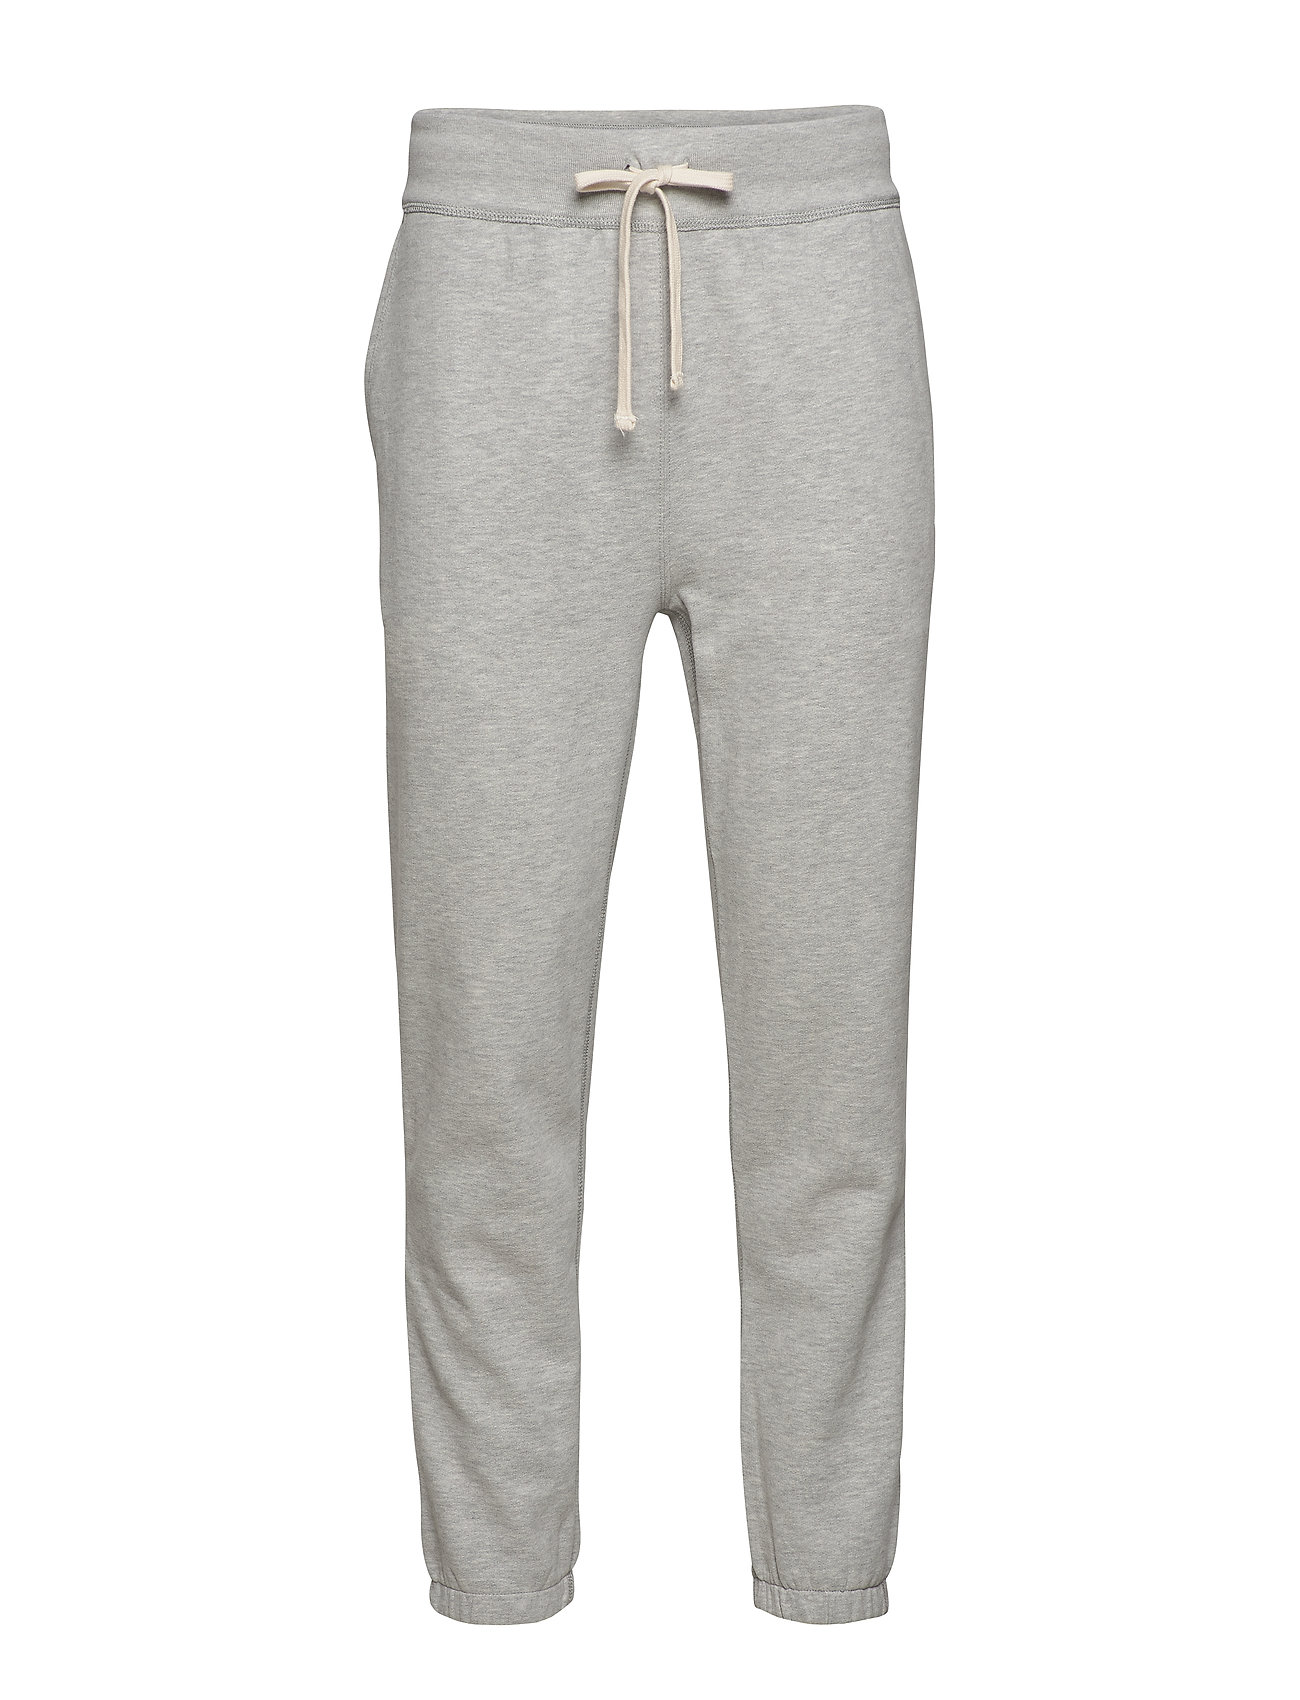 The Rl Fleece Tracksuit Bottoms Designers Sweatpants Grey Polo Ralph Lauren